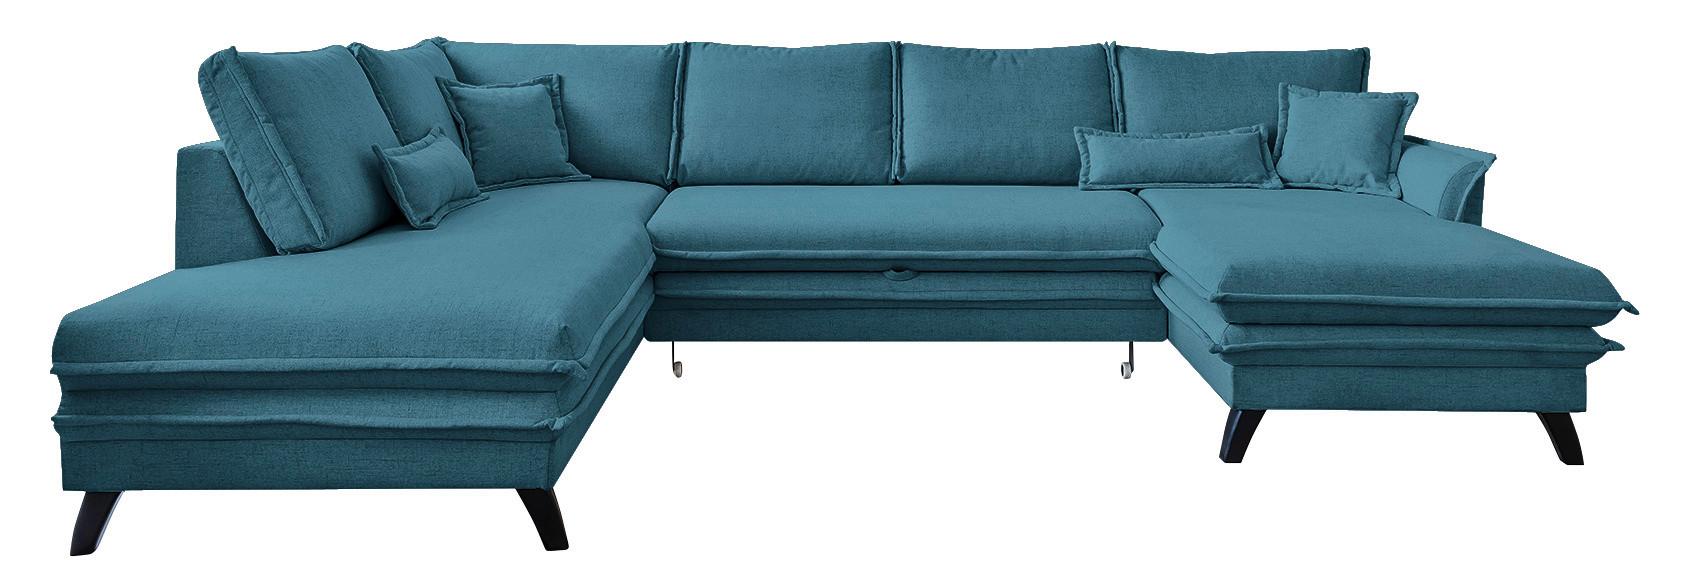 Sedežna Garnitura Charming Charlie, Modra, Ležišče - modra/barve petroleja, Basics, tekstil/leseni material (200/300/150cm) - MID.YOU